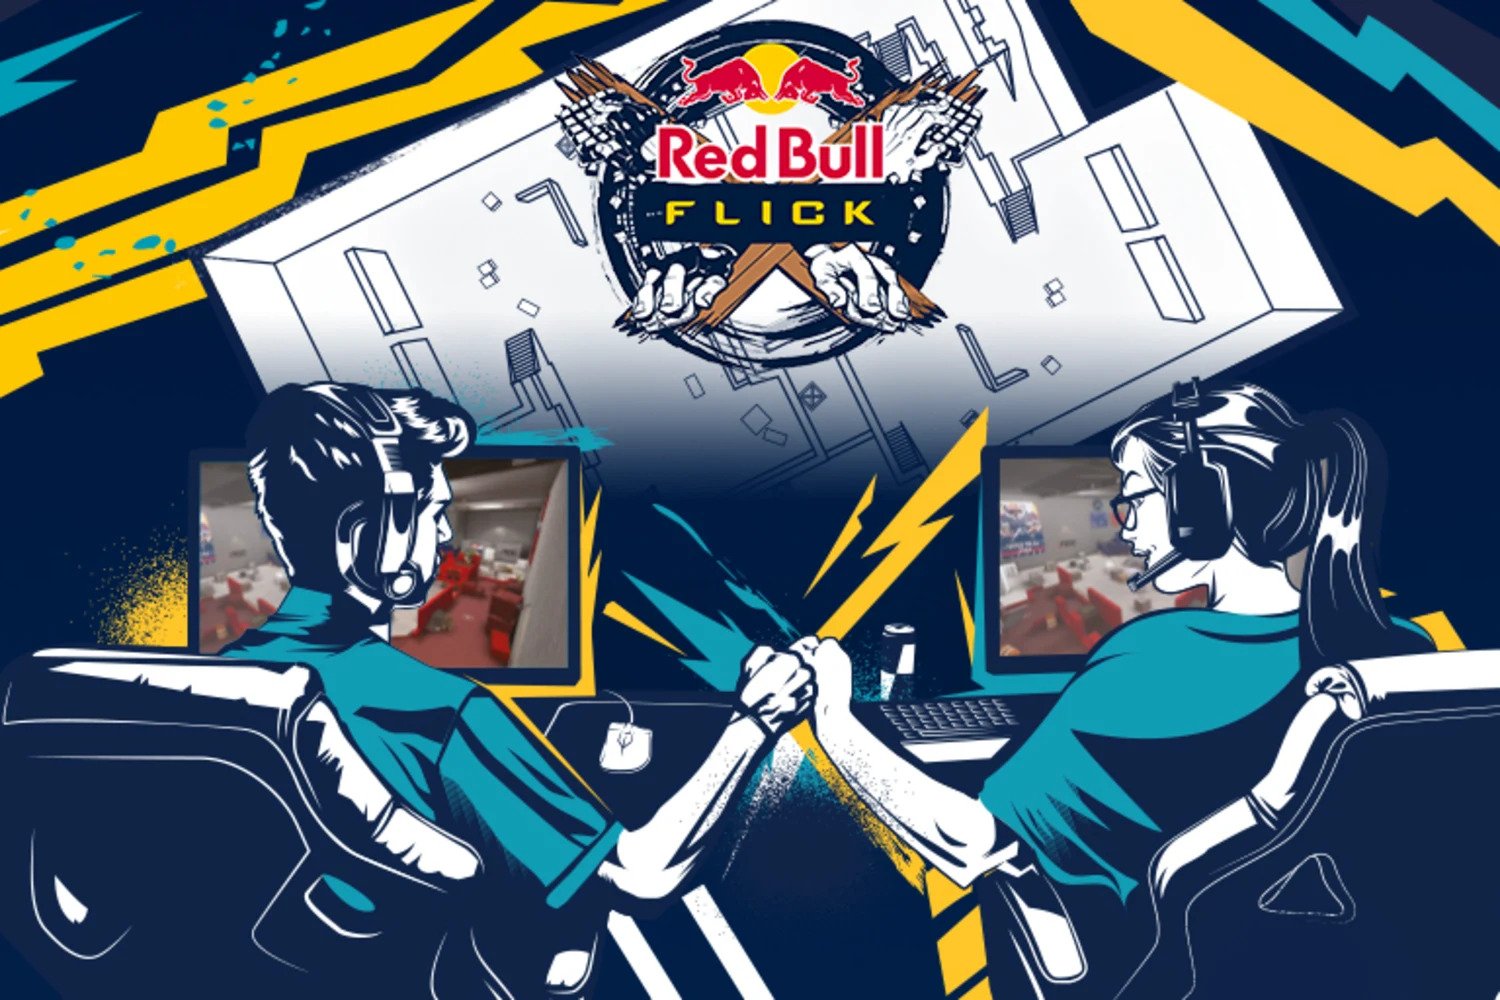 Red Bull Flick Loco